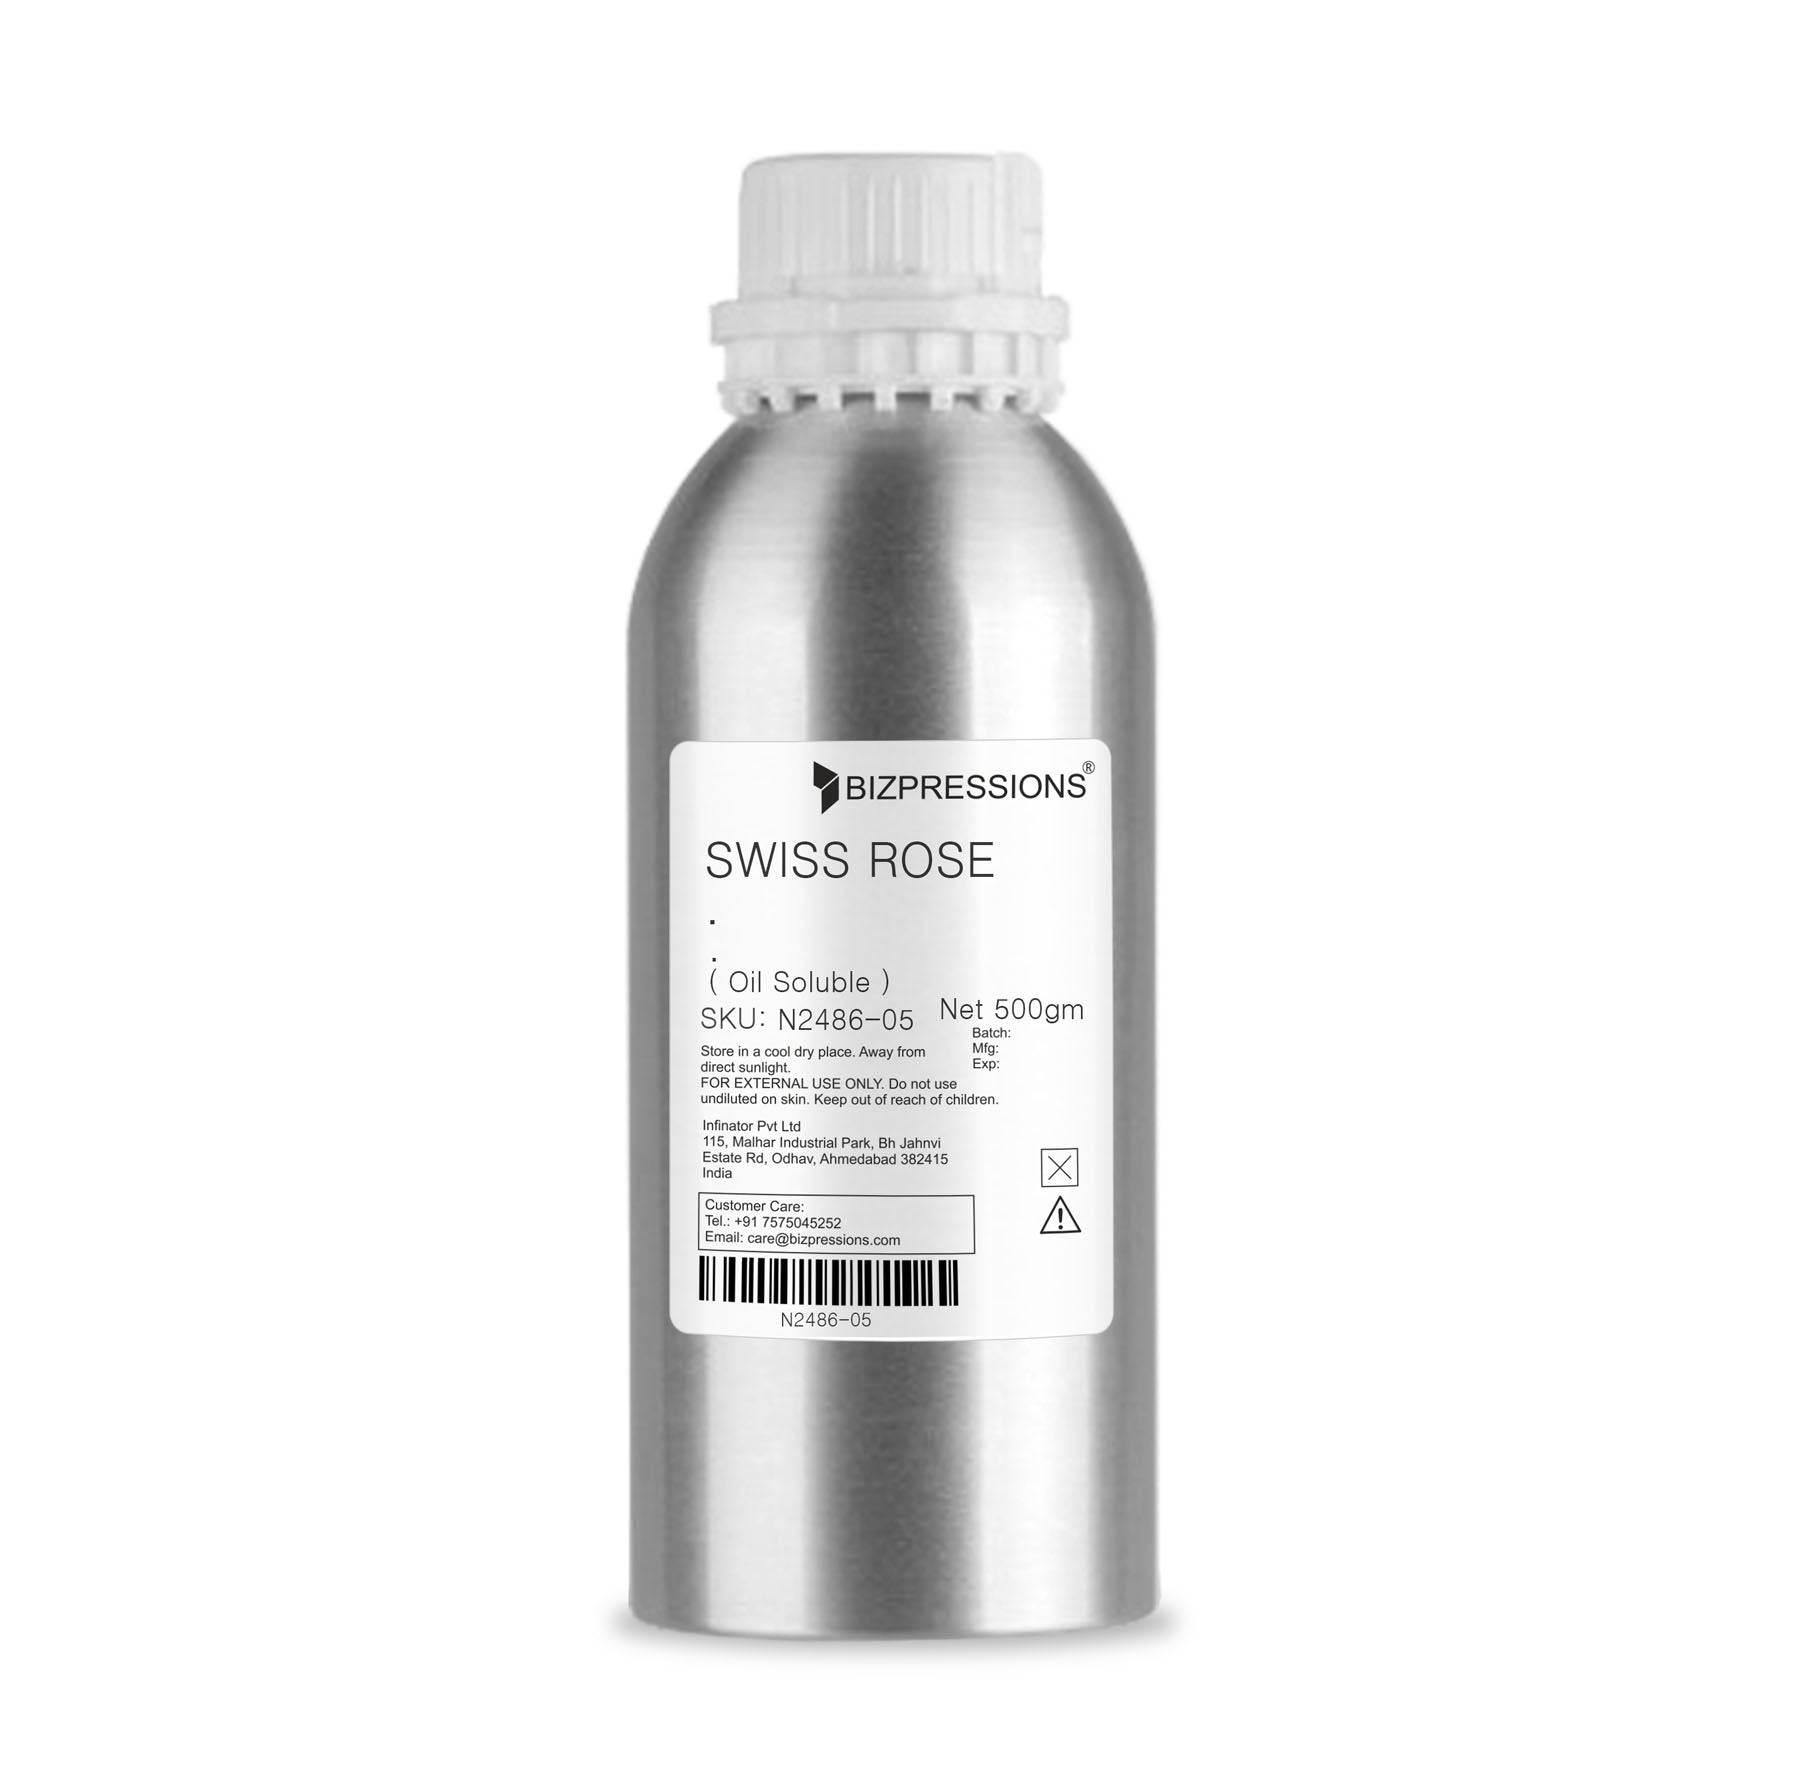 SWISS ROSE - Fragrance ( Oil Soluble ) - 500 gm